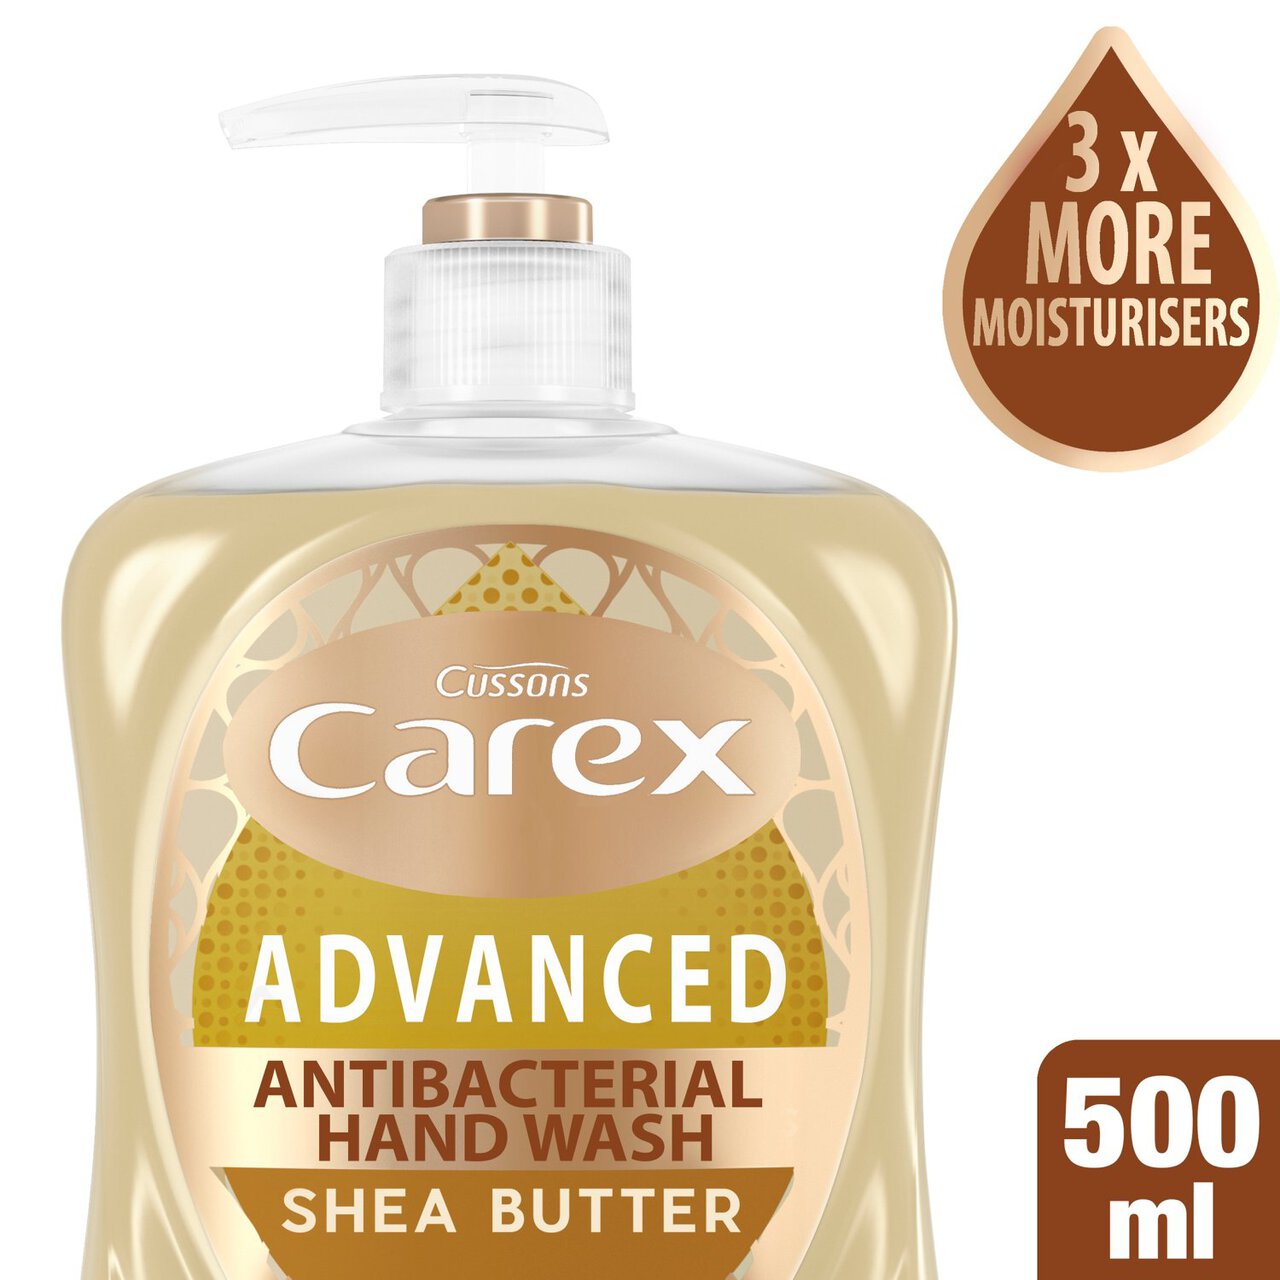 Carex Advanced Care Shea Butter Antibacterial Handwash 500ml